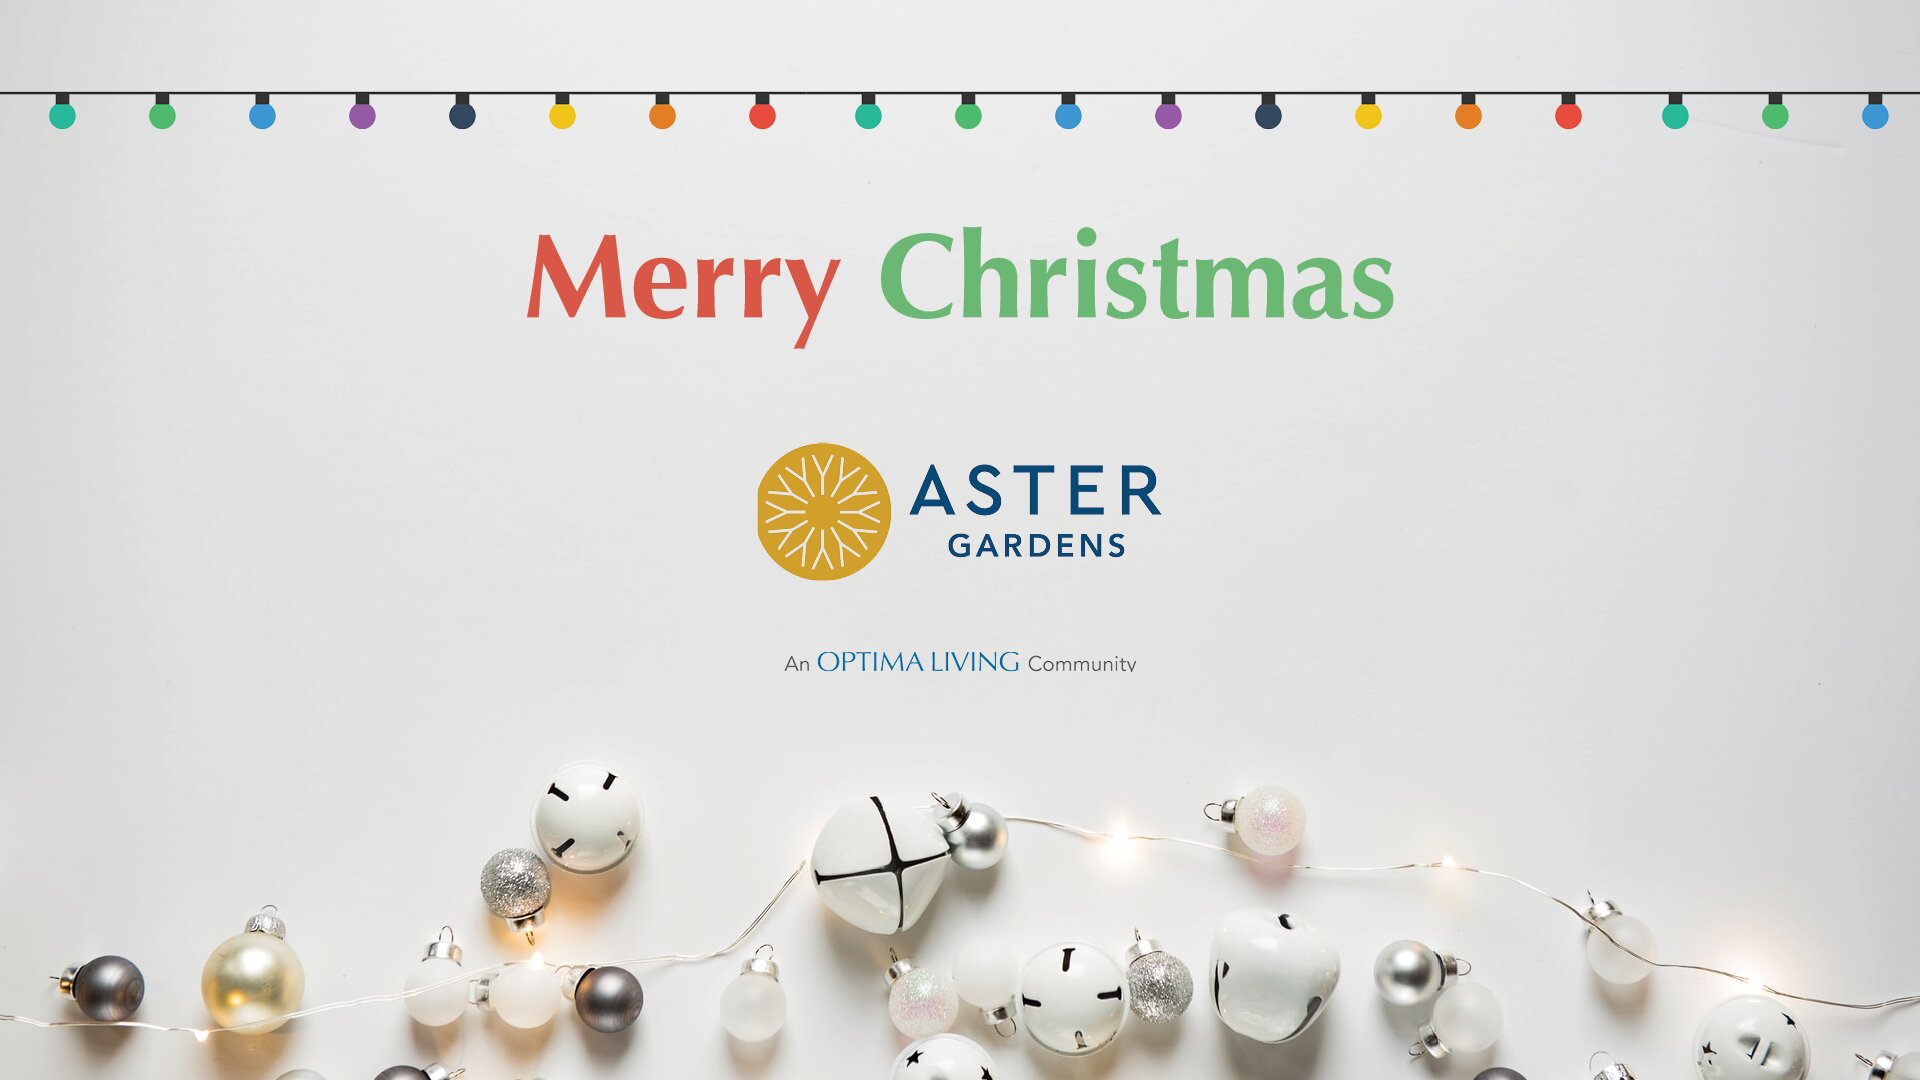 Merry Christmas written on Aster Garden's logo